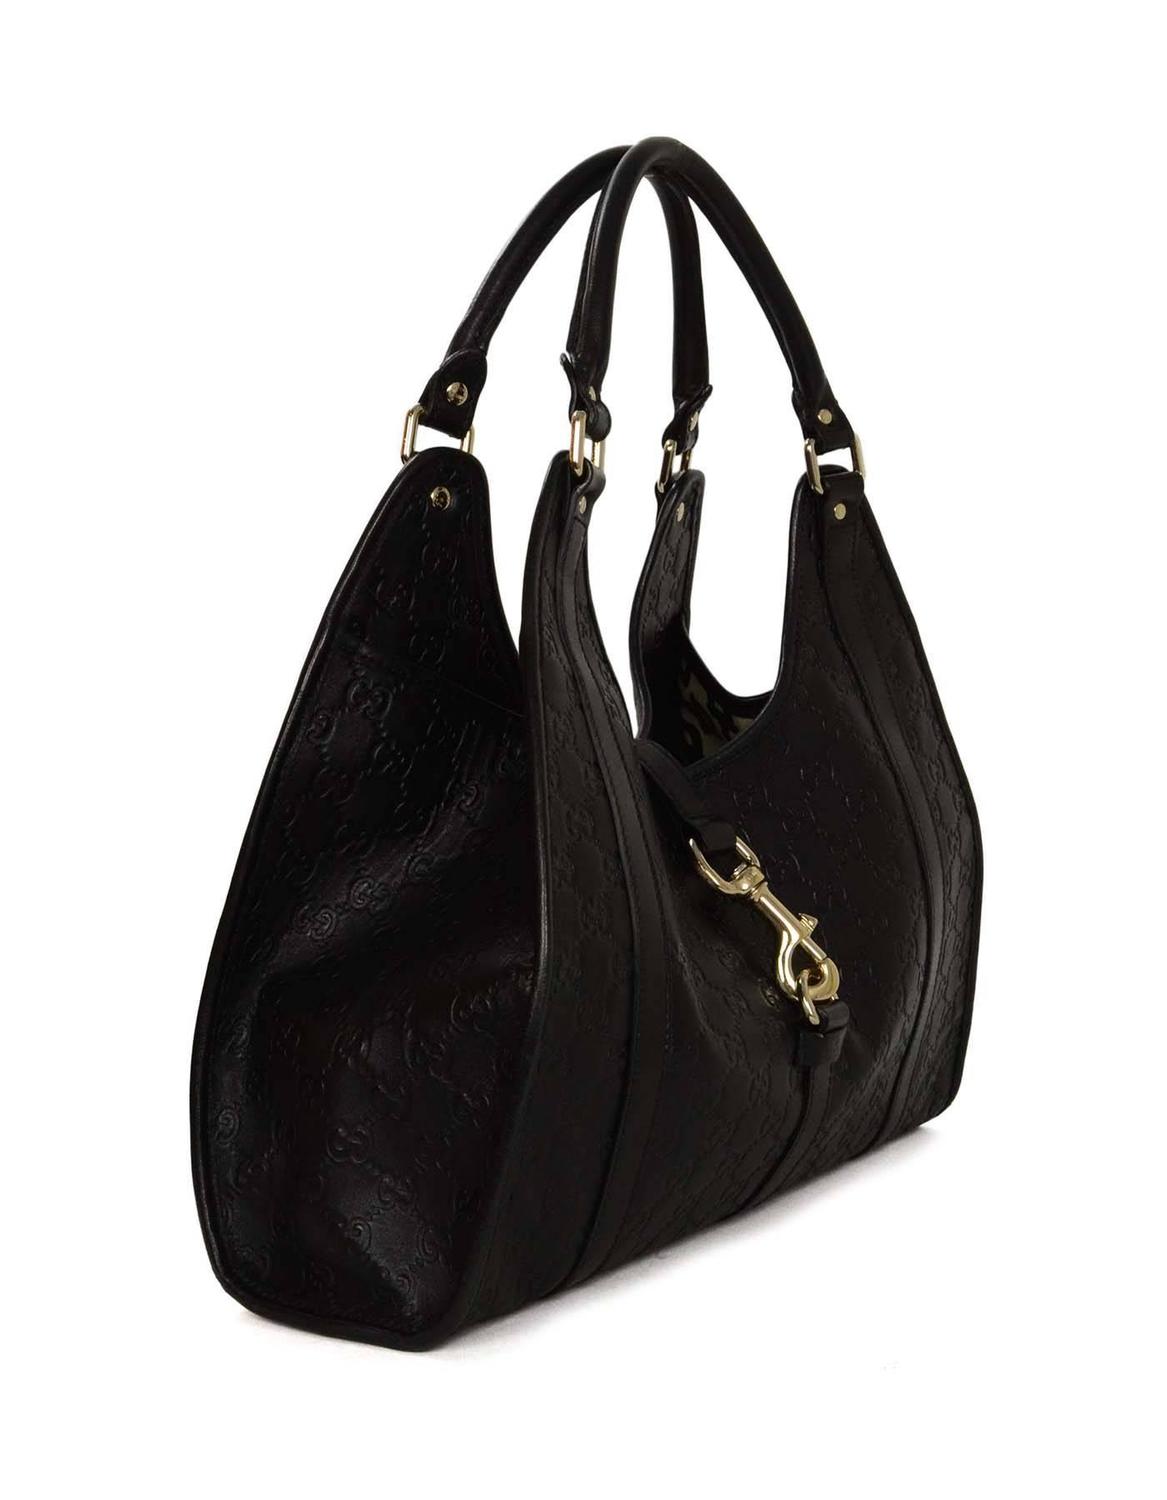 Gucci Black Guccissima Leather Joy Medium Shoulder Bag at 1stdibs